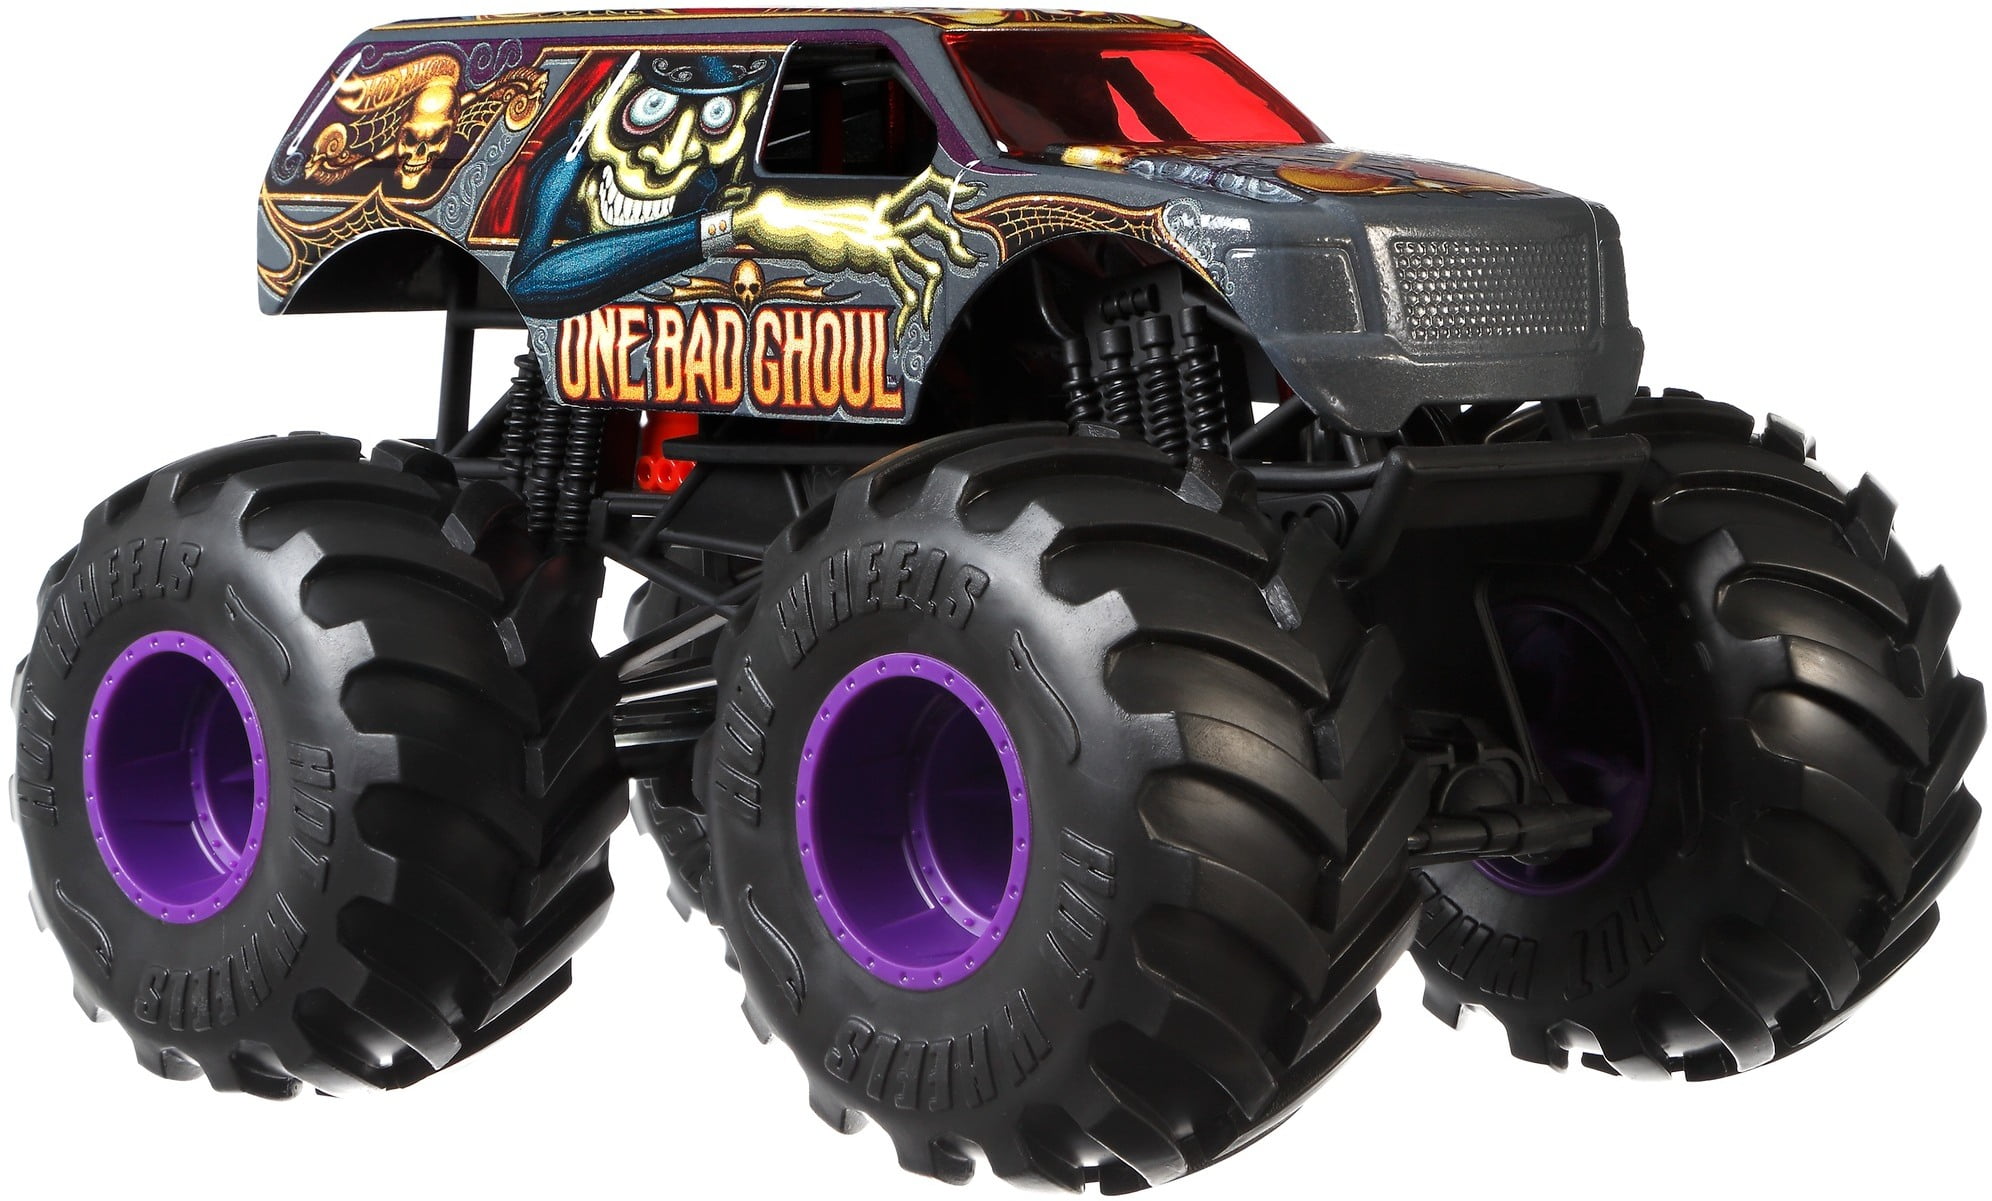 Hot Wheels 1:24 Scale Monster Truck Black Hotrod w/ Skull and Flames Jam